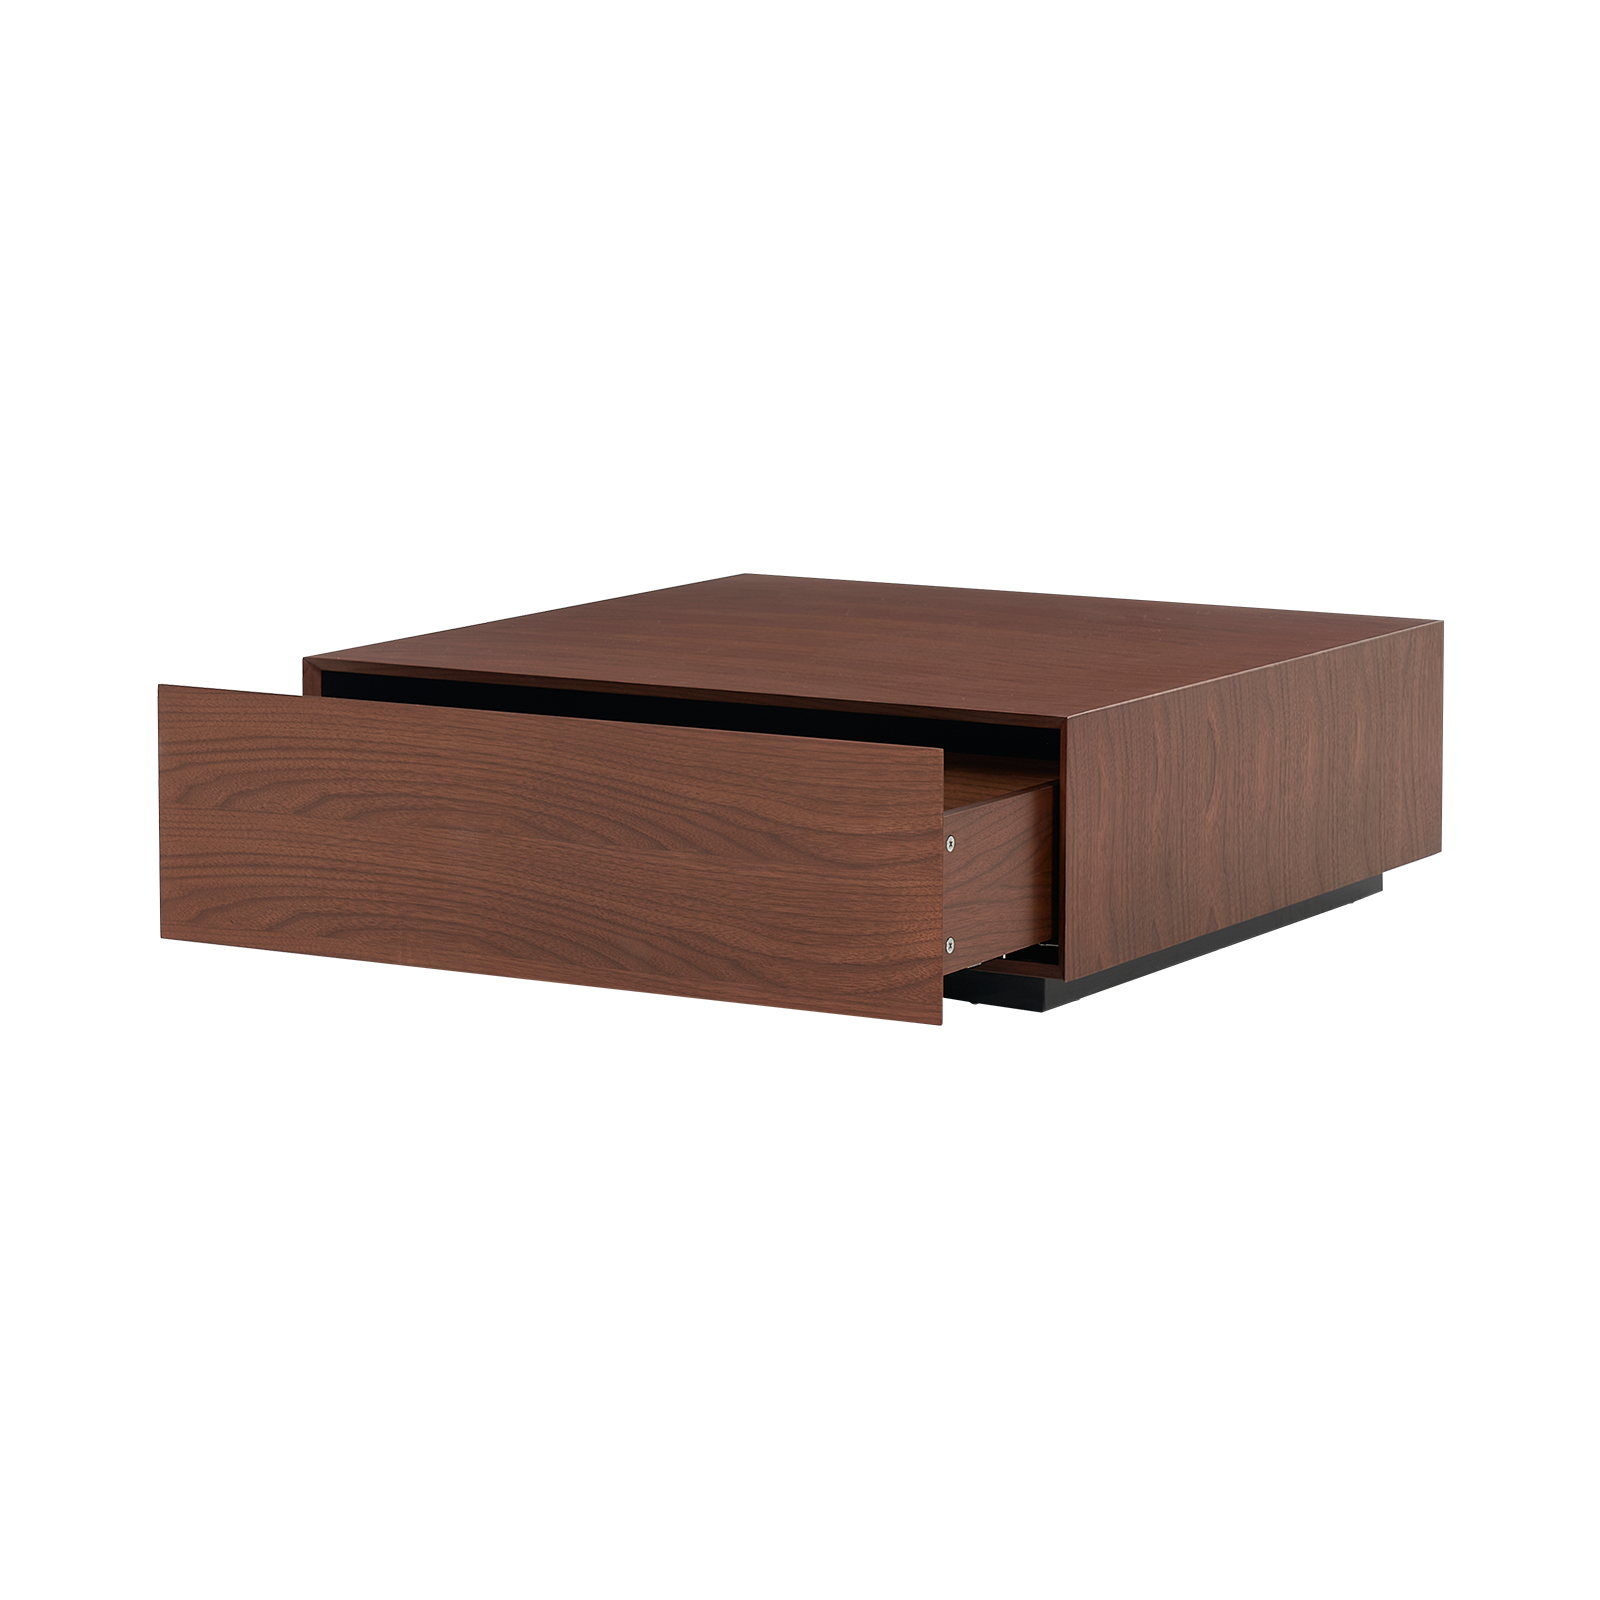 Table Basse / Carrée Sugar Cubes - Placage Noyer - 900*900mm